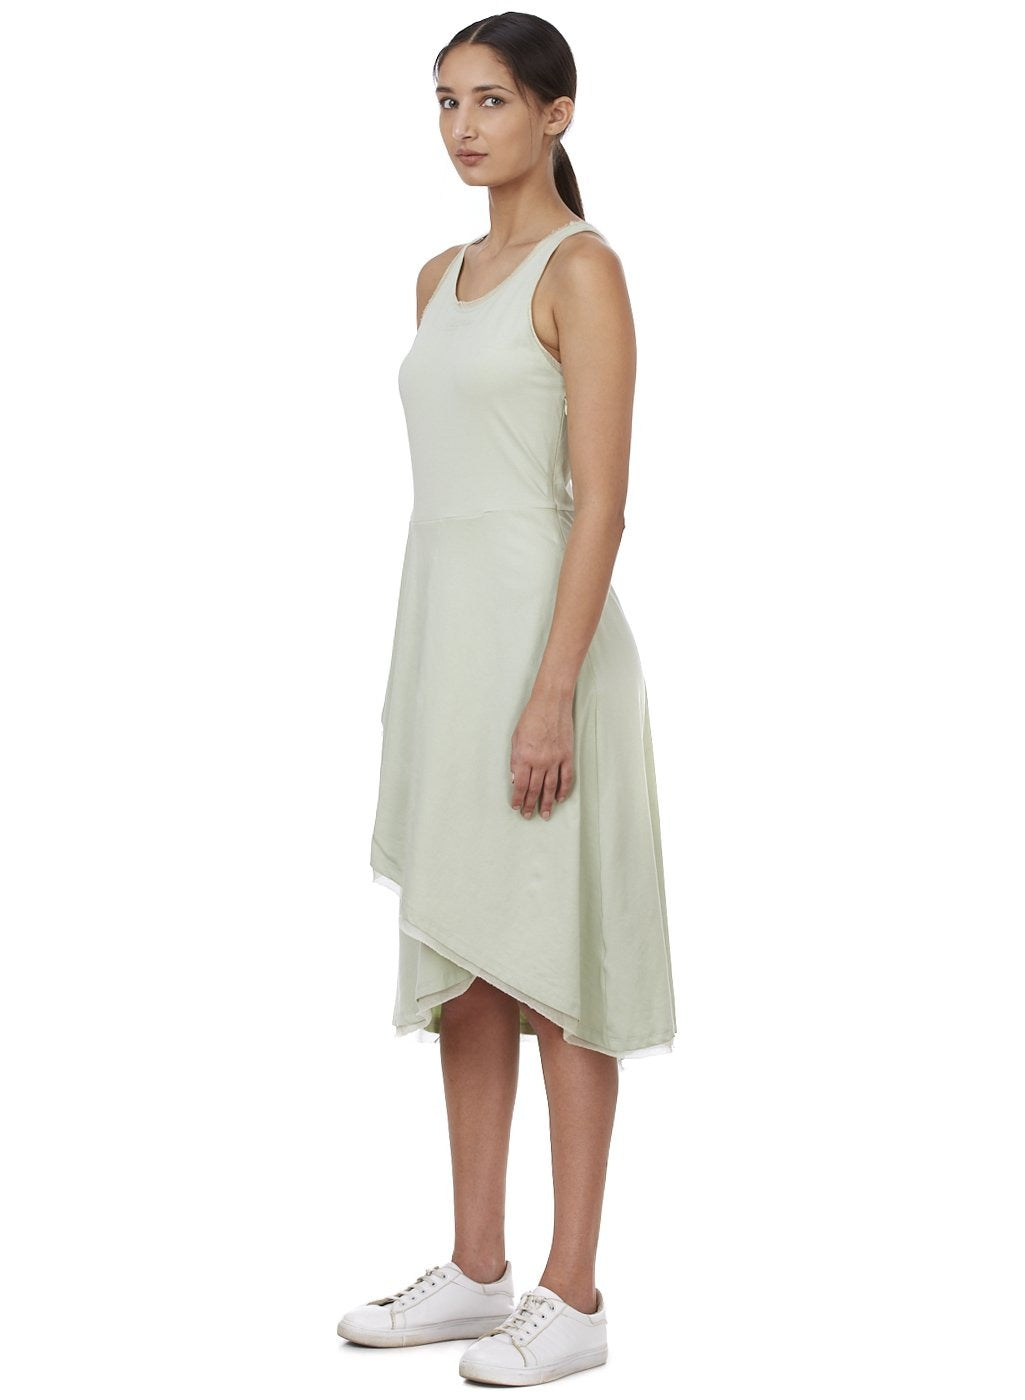 Willa Draped Dress - Genes online store 2020